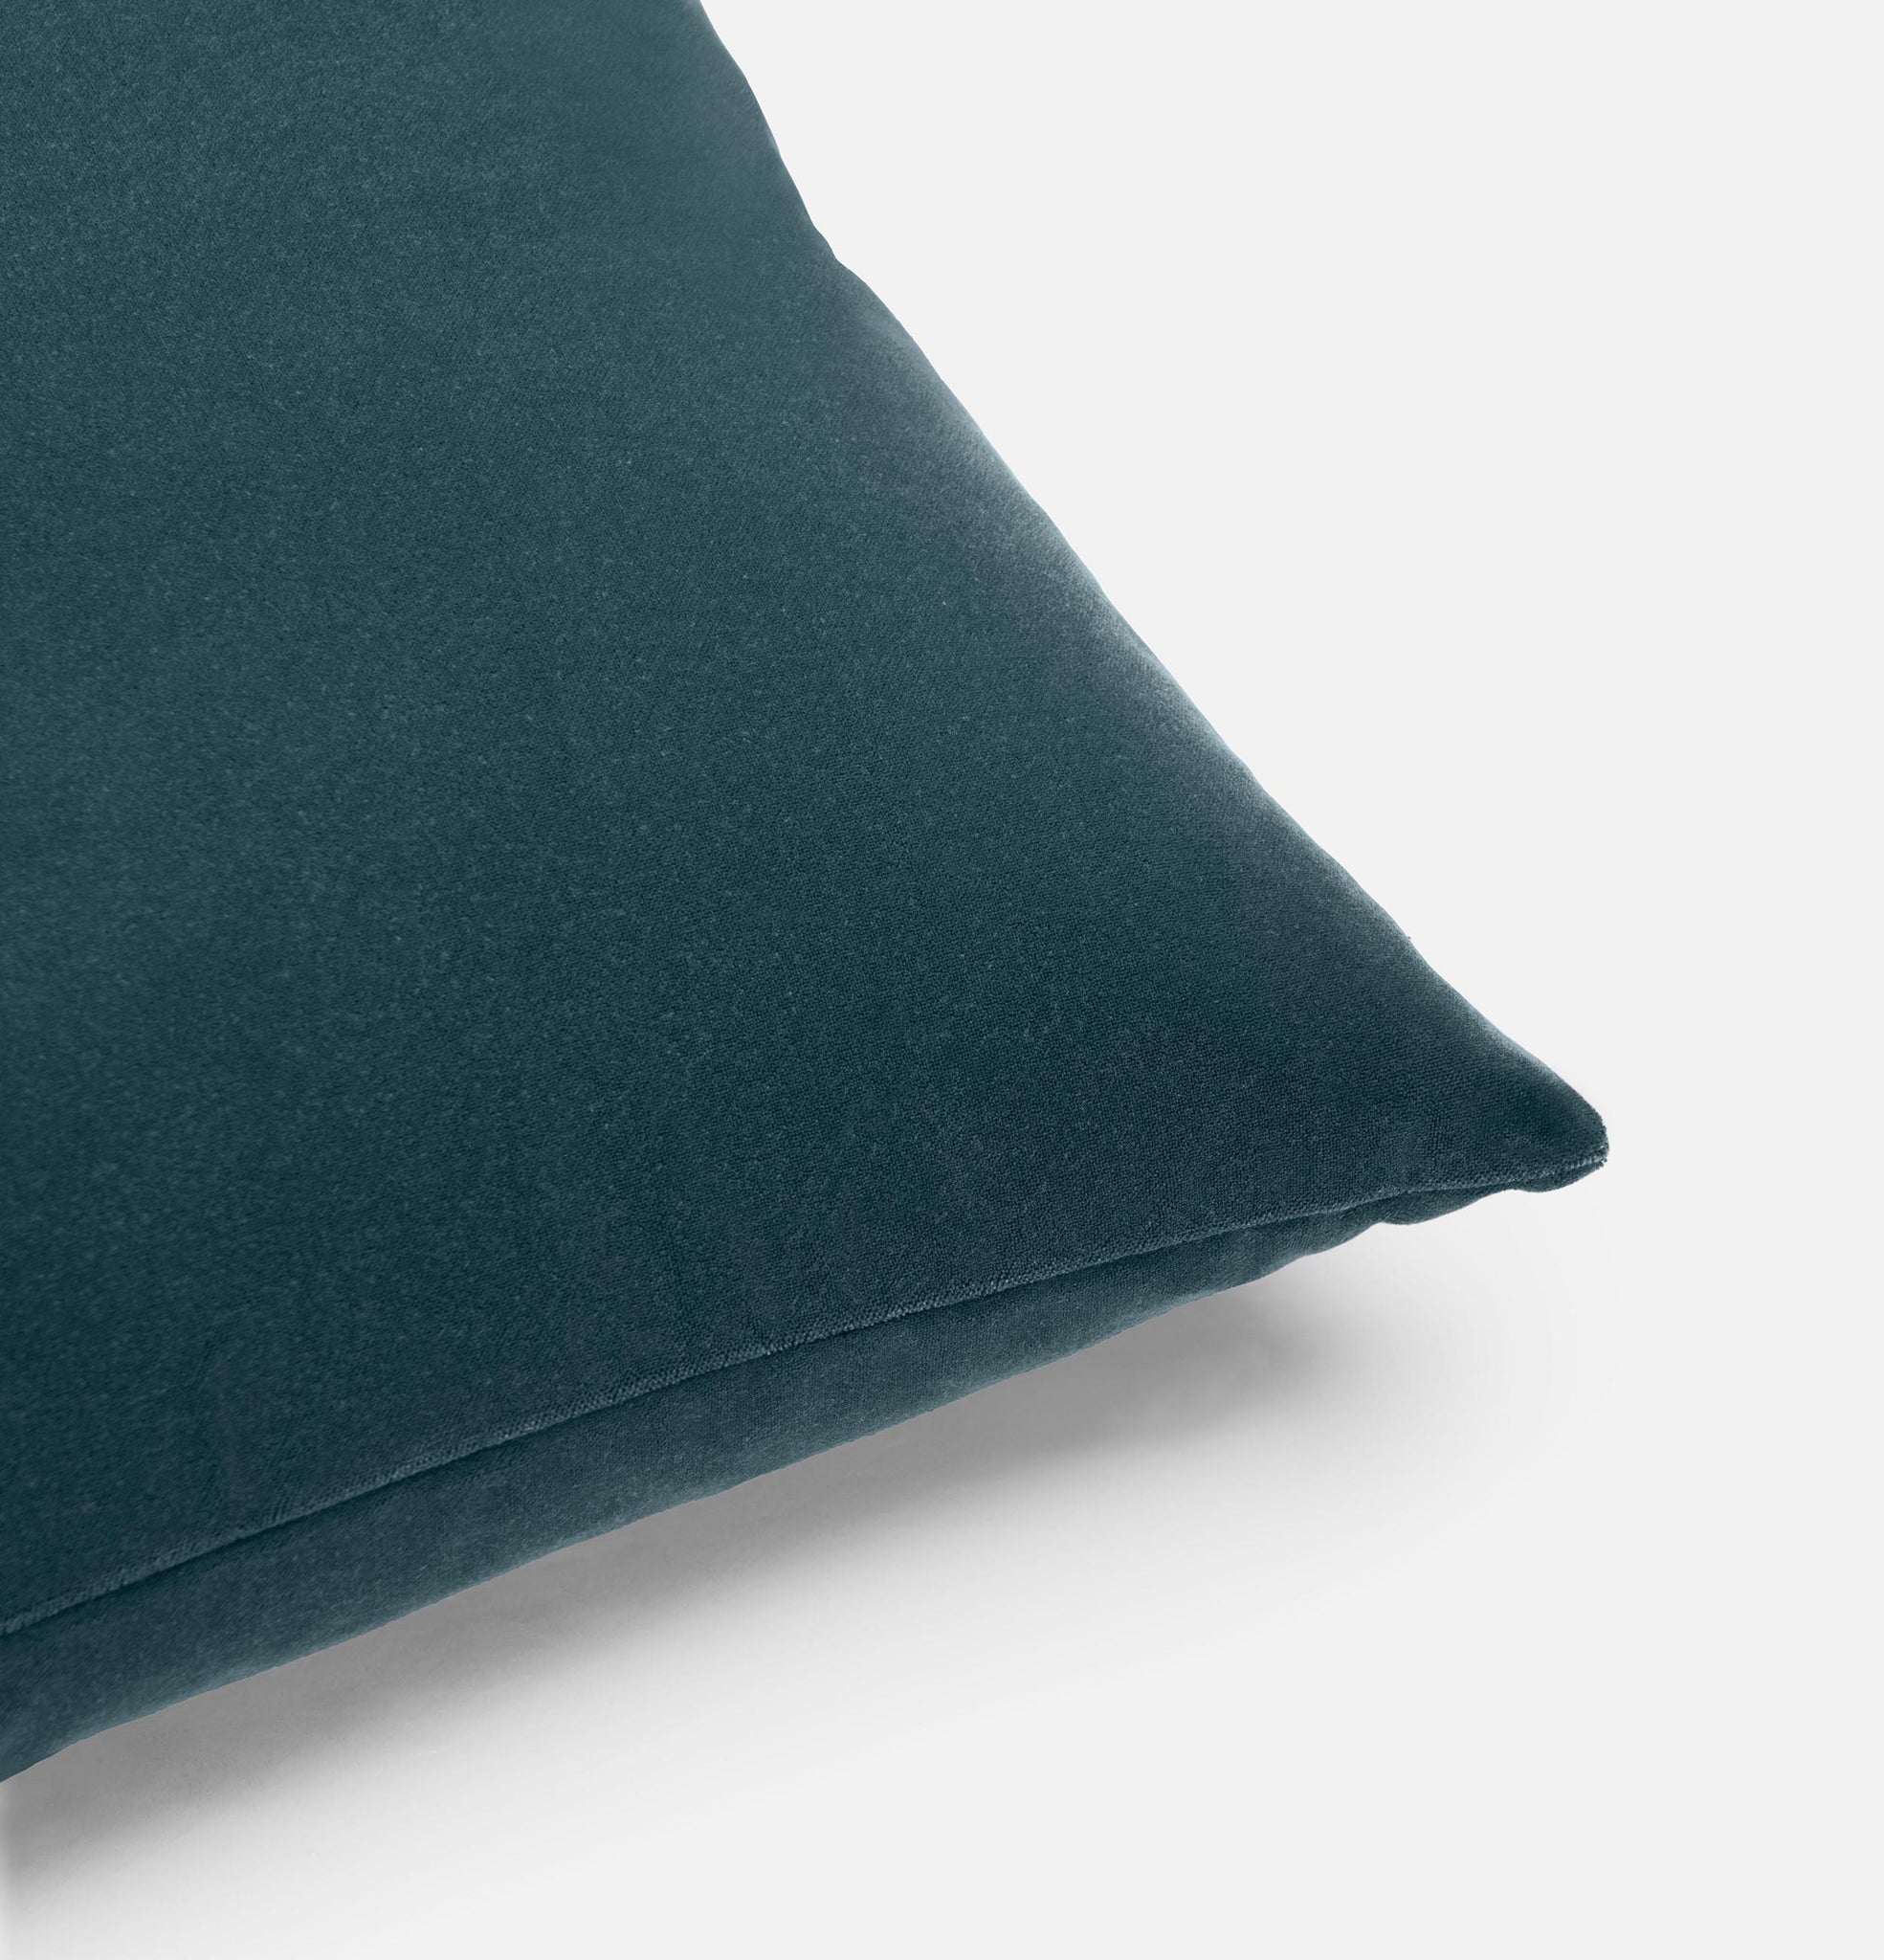 Corner detail of icy teal velvet cushion